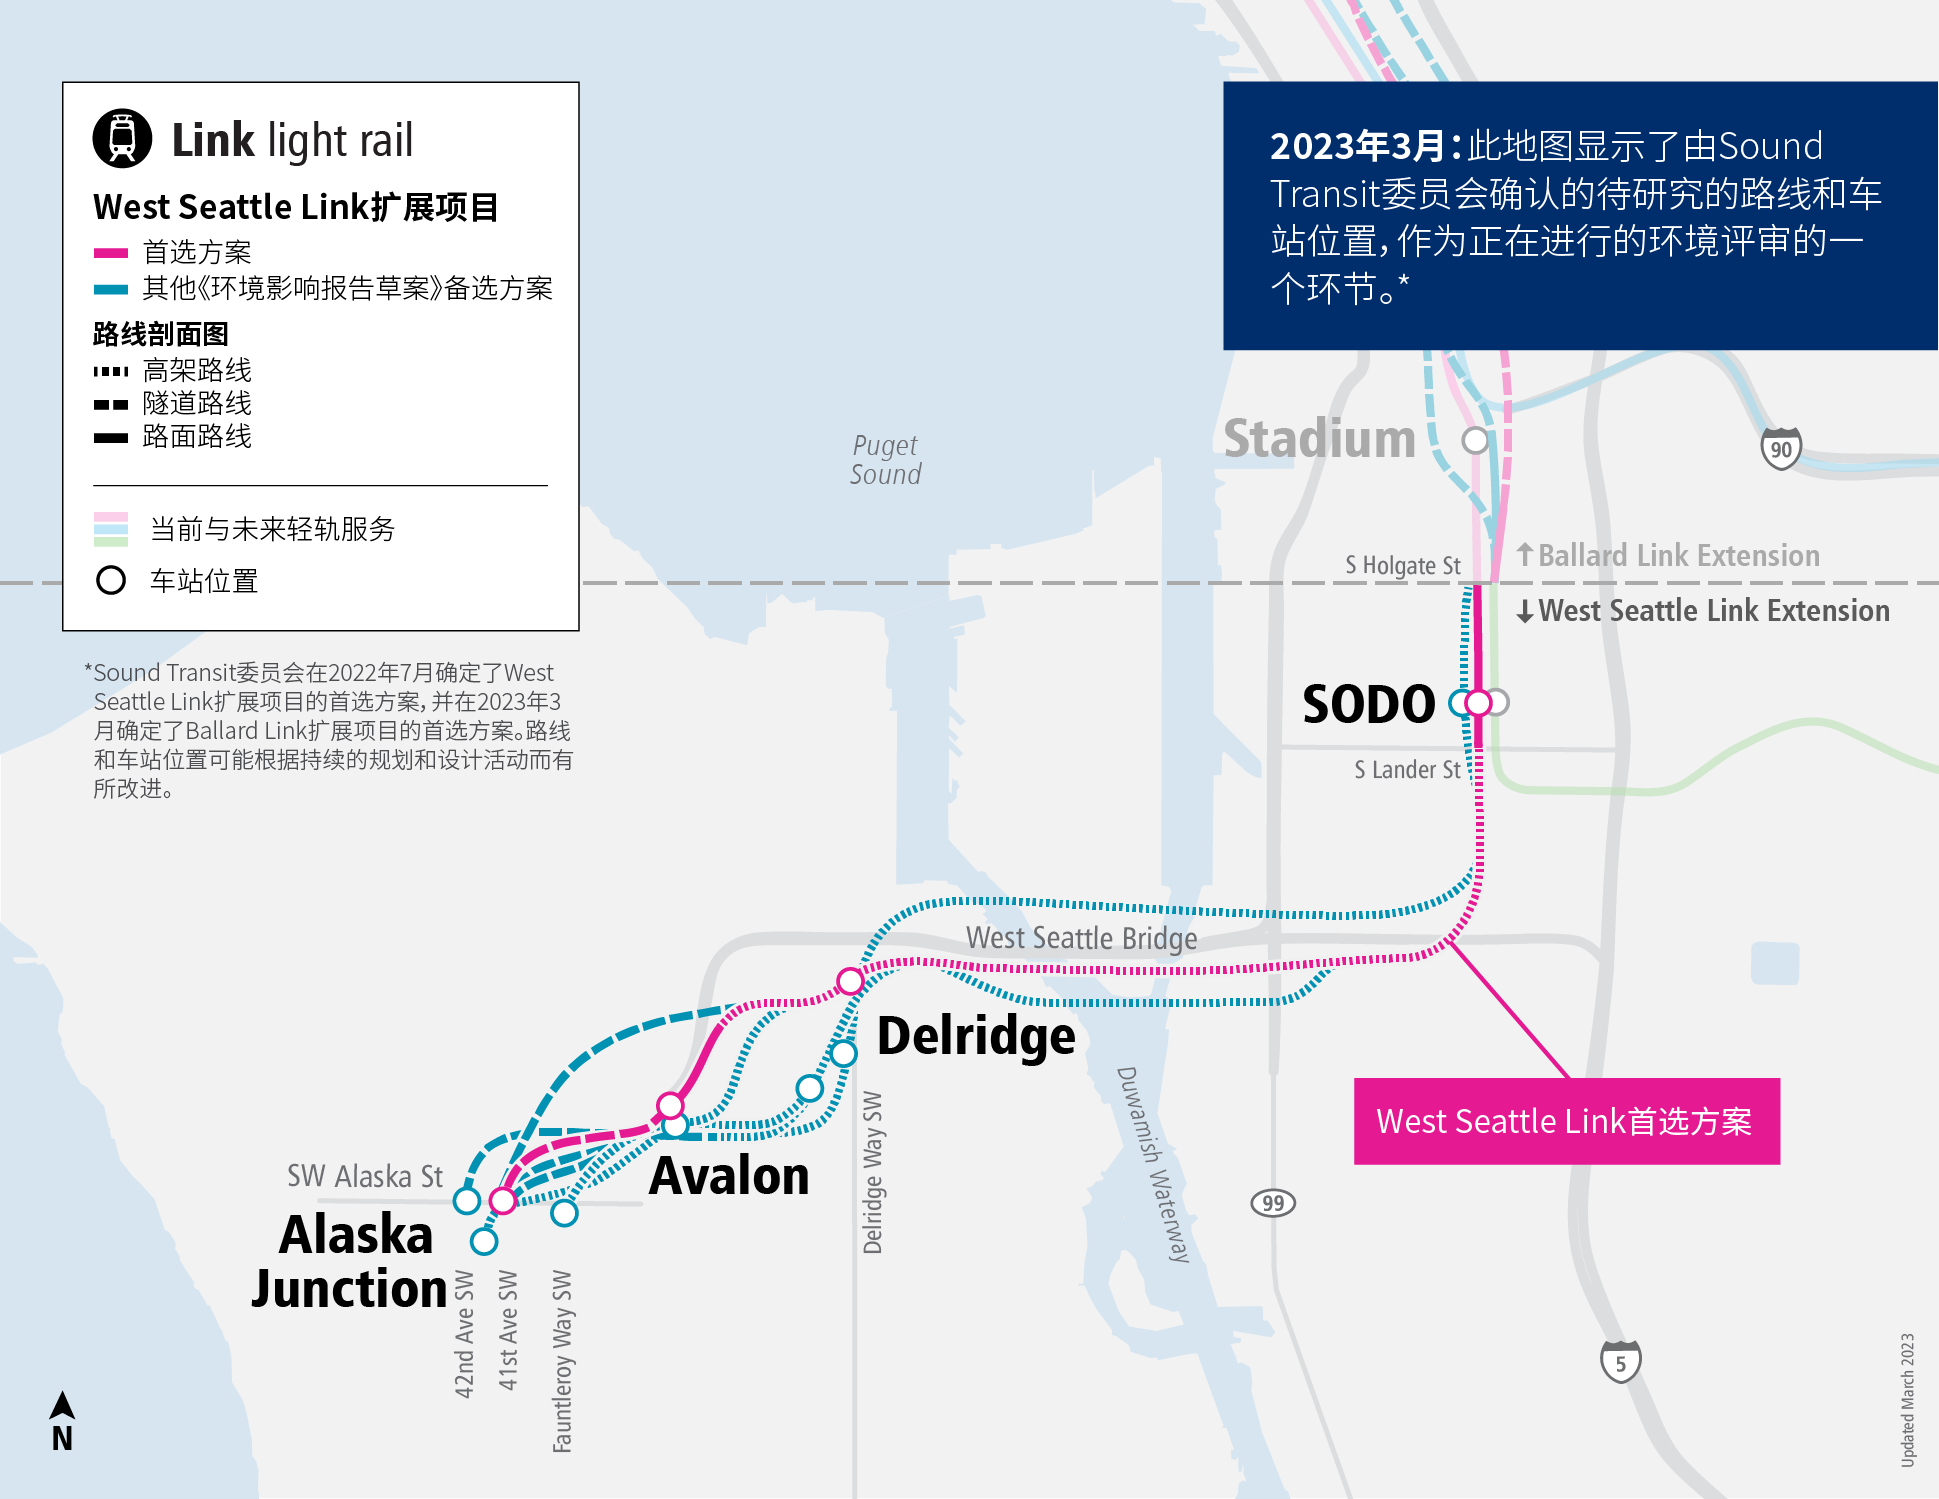 West Seattle Link扩展项目地图的图片，显示我们当前正在评估的首选方案和其他备选方案。该地图同时涵盖车站位置，并描述备选方案属于高架、隧道还是地面形式。 